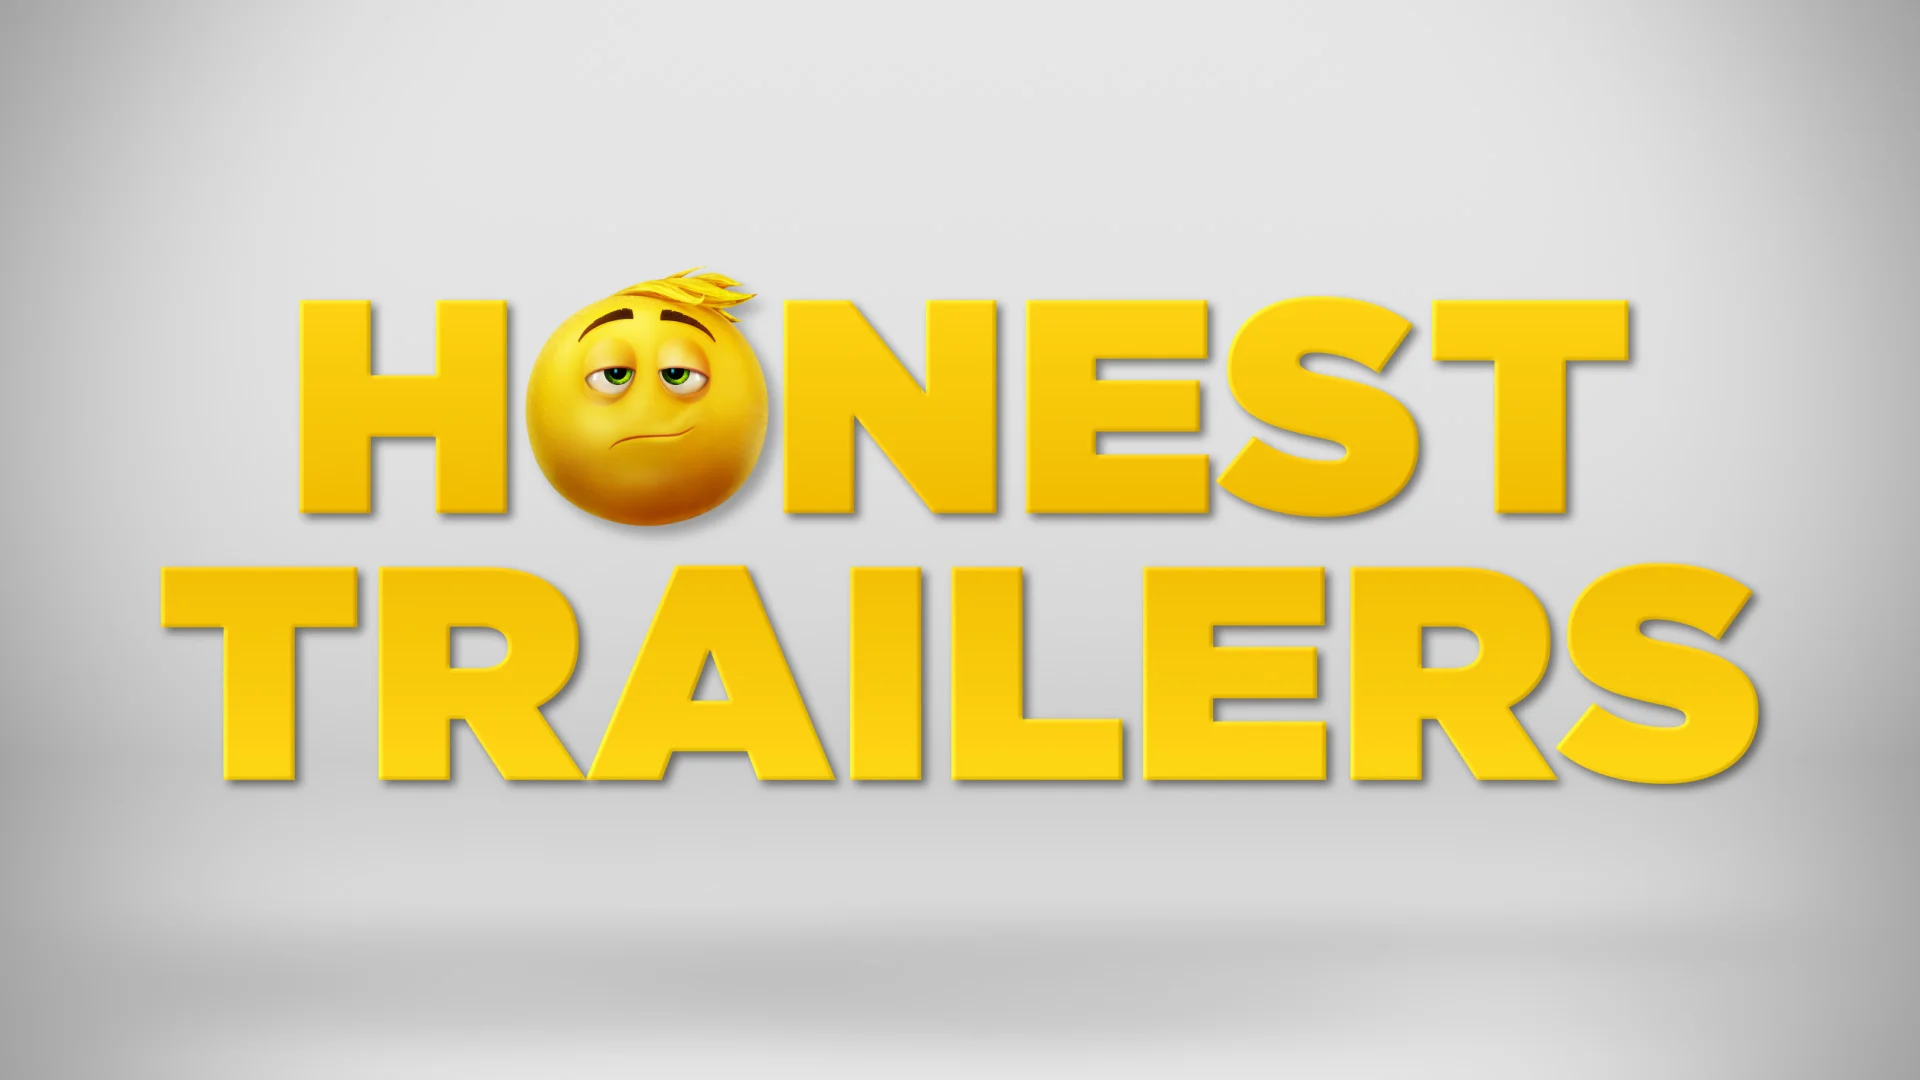 Moai Emoji (Trailer) on Vimeo